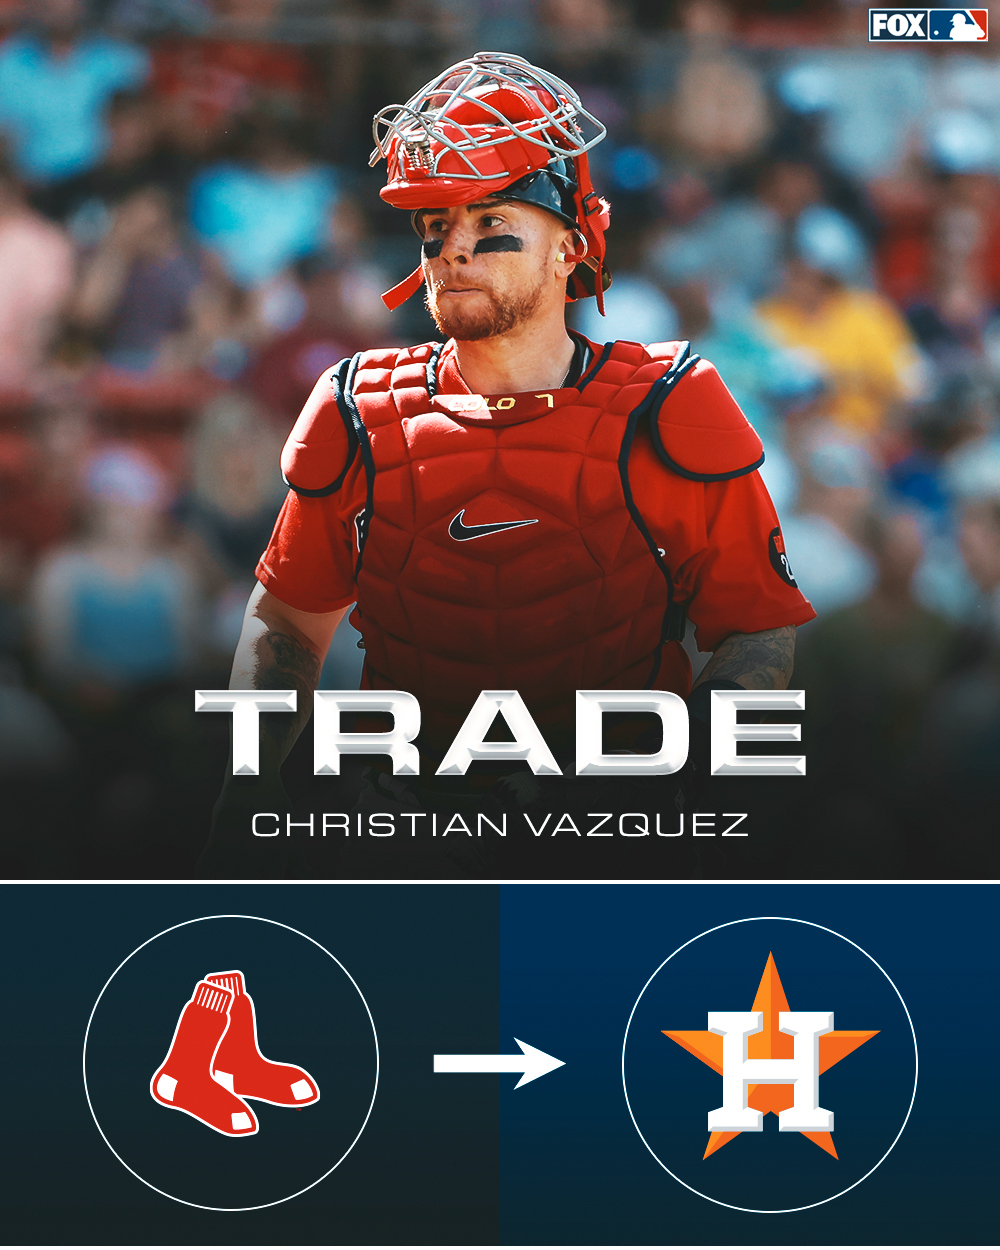 Houston Astros trade for Red Sox catcher Christian Vázquez